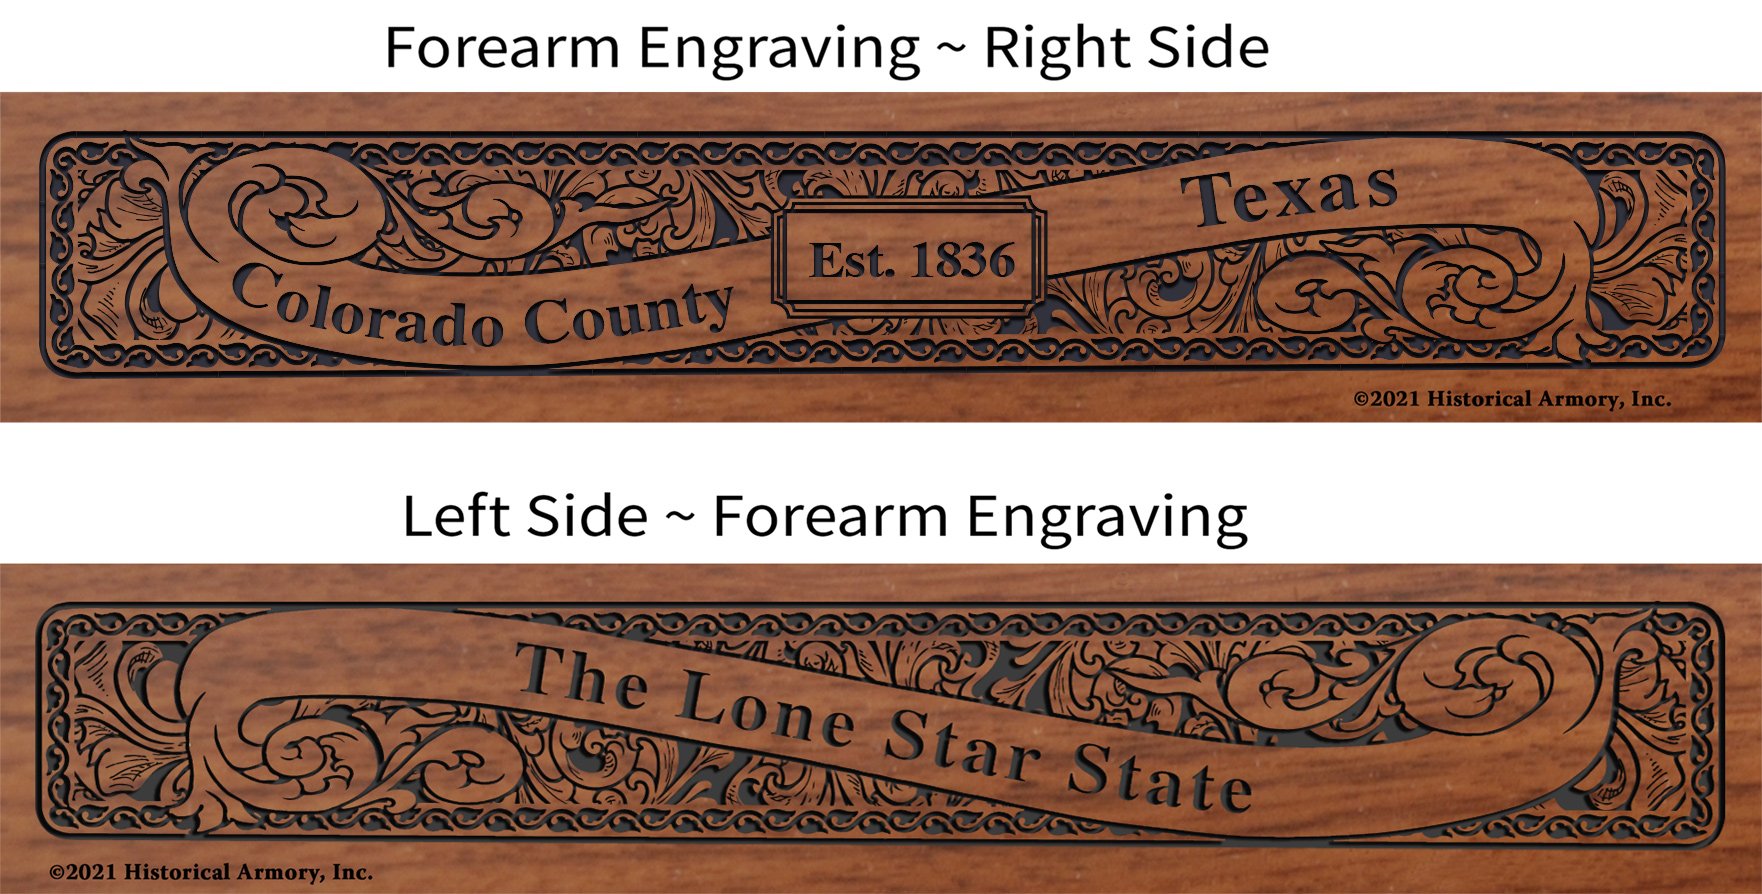 Colorado County Texas Establishment and Motto History Engraved Rifle Forearm